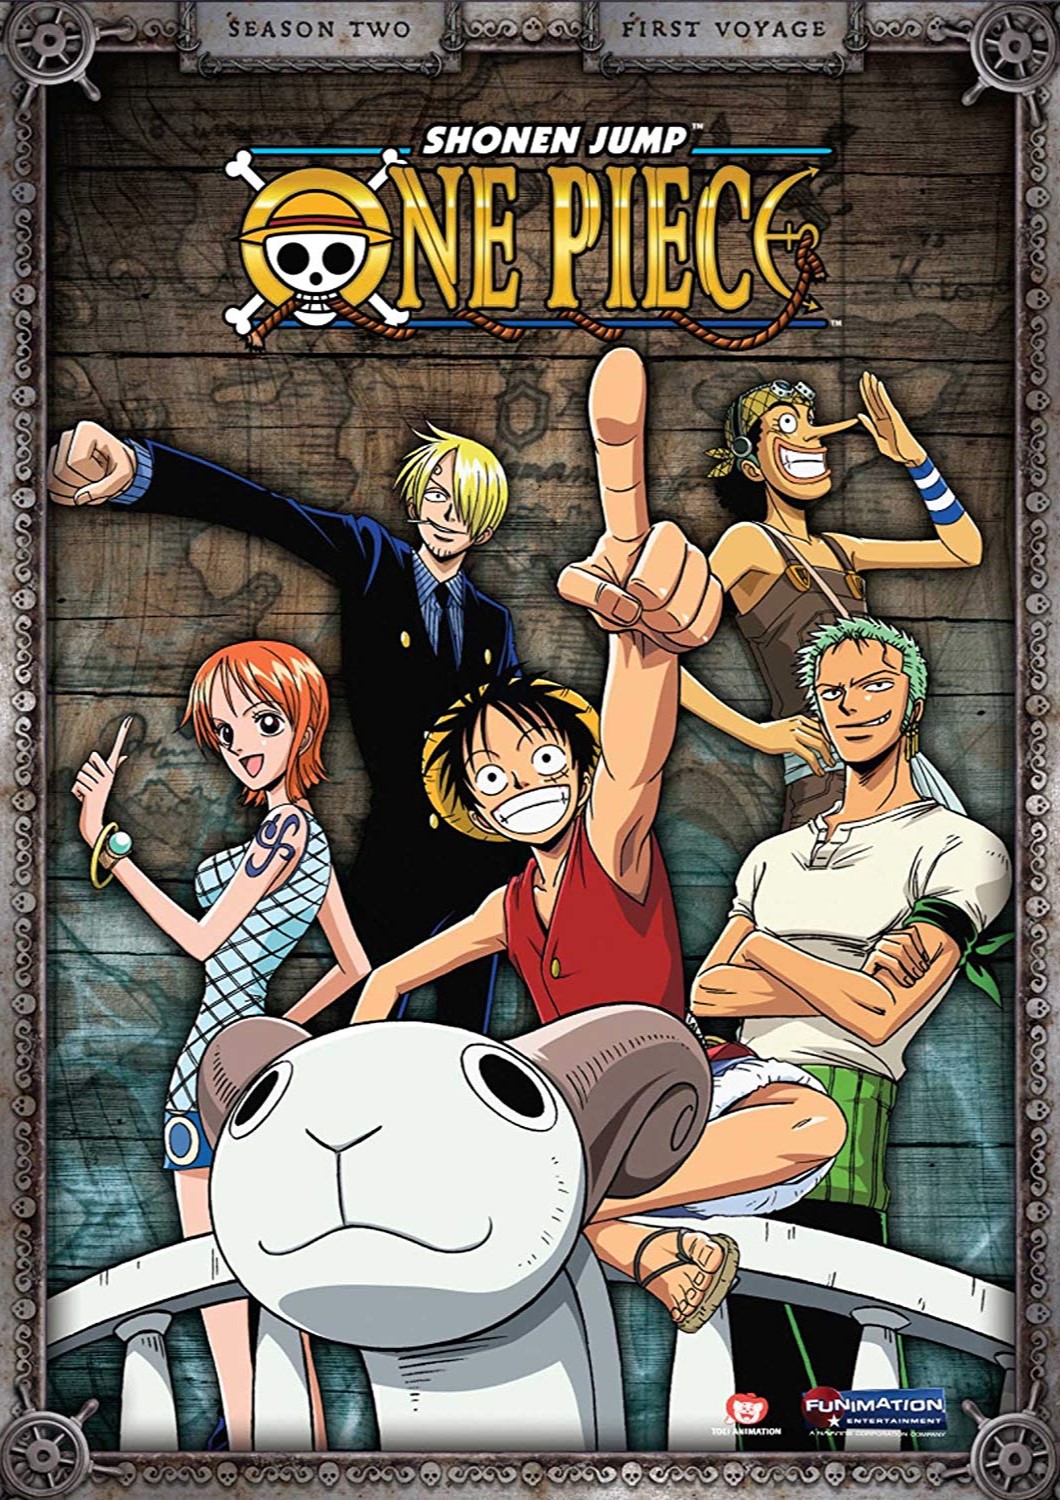 One Piece Season 1 วันพีช ซีซั่น 1 อิสท์บลู ตอนที่ 1-52 พากย์ไทย [HD]